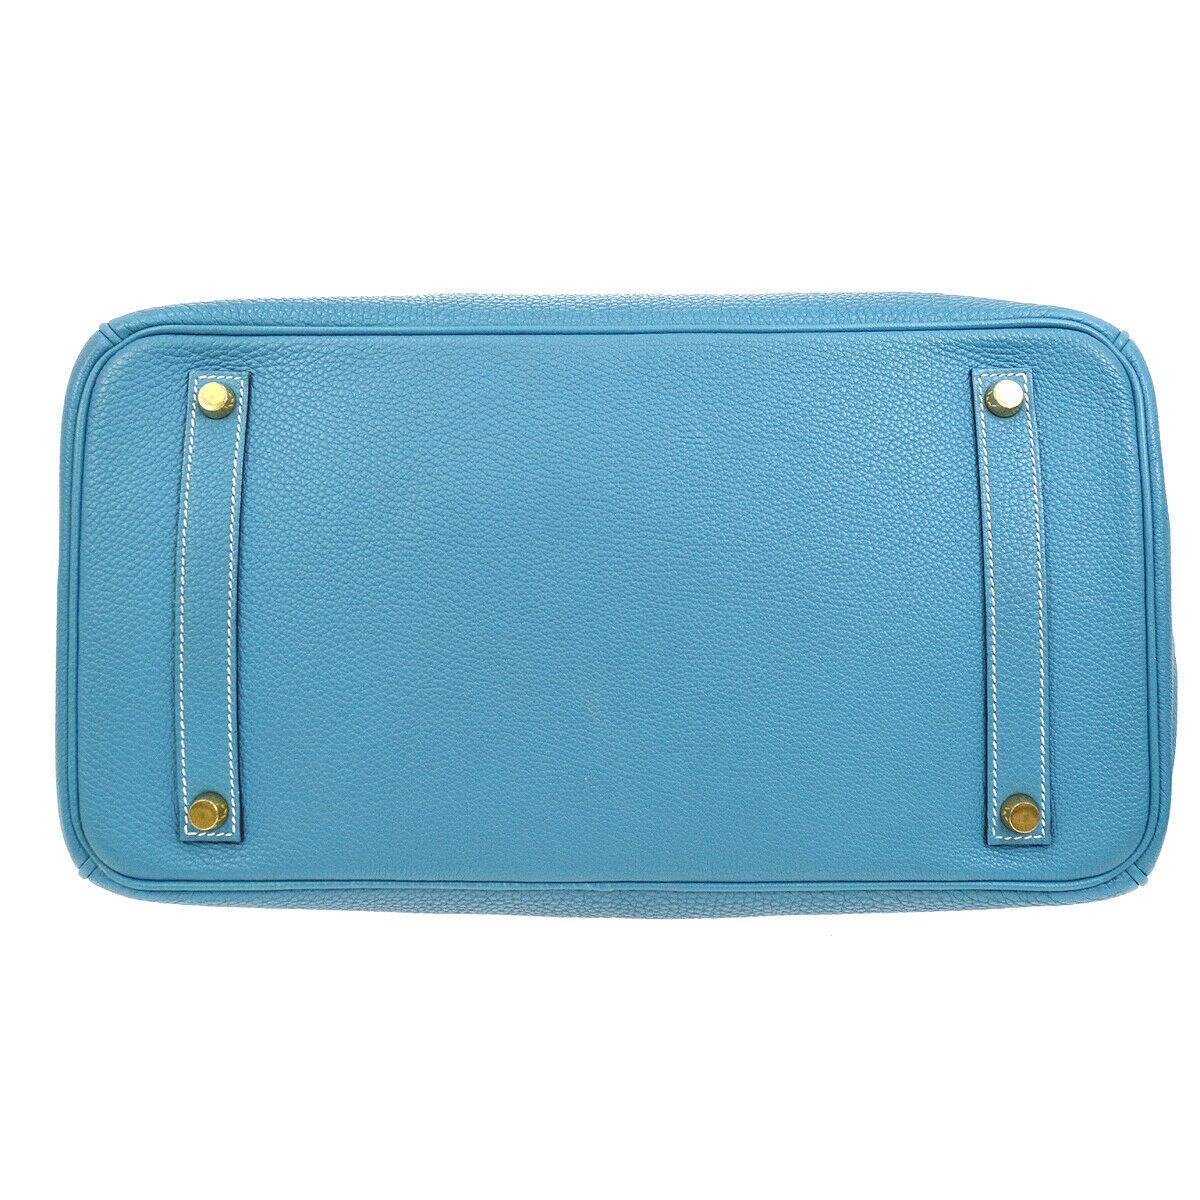 Hermes Birkin 35 Blue Leather Gold Top Carryall Handle Satchel Travel Tote Bag 1